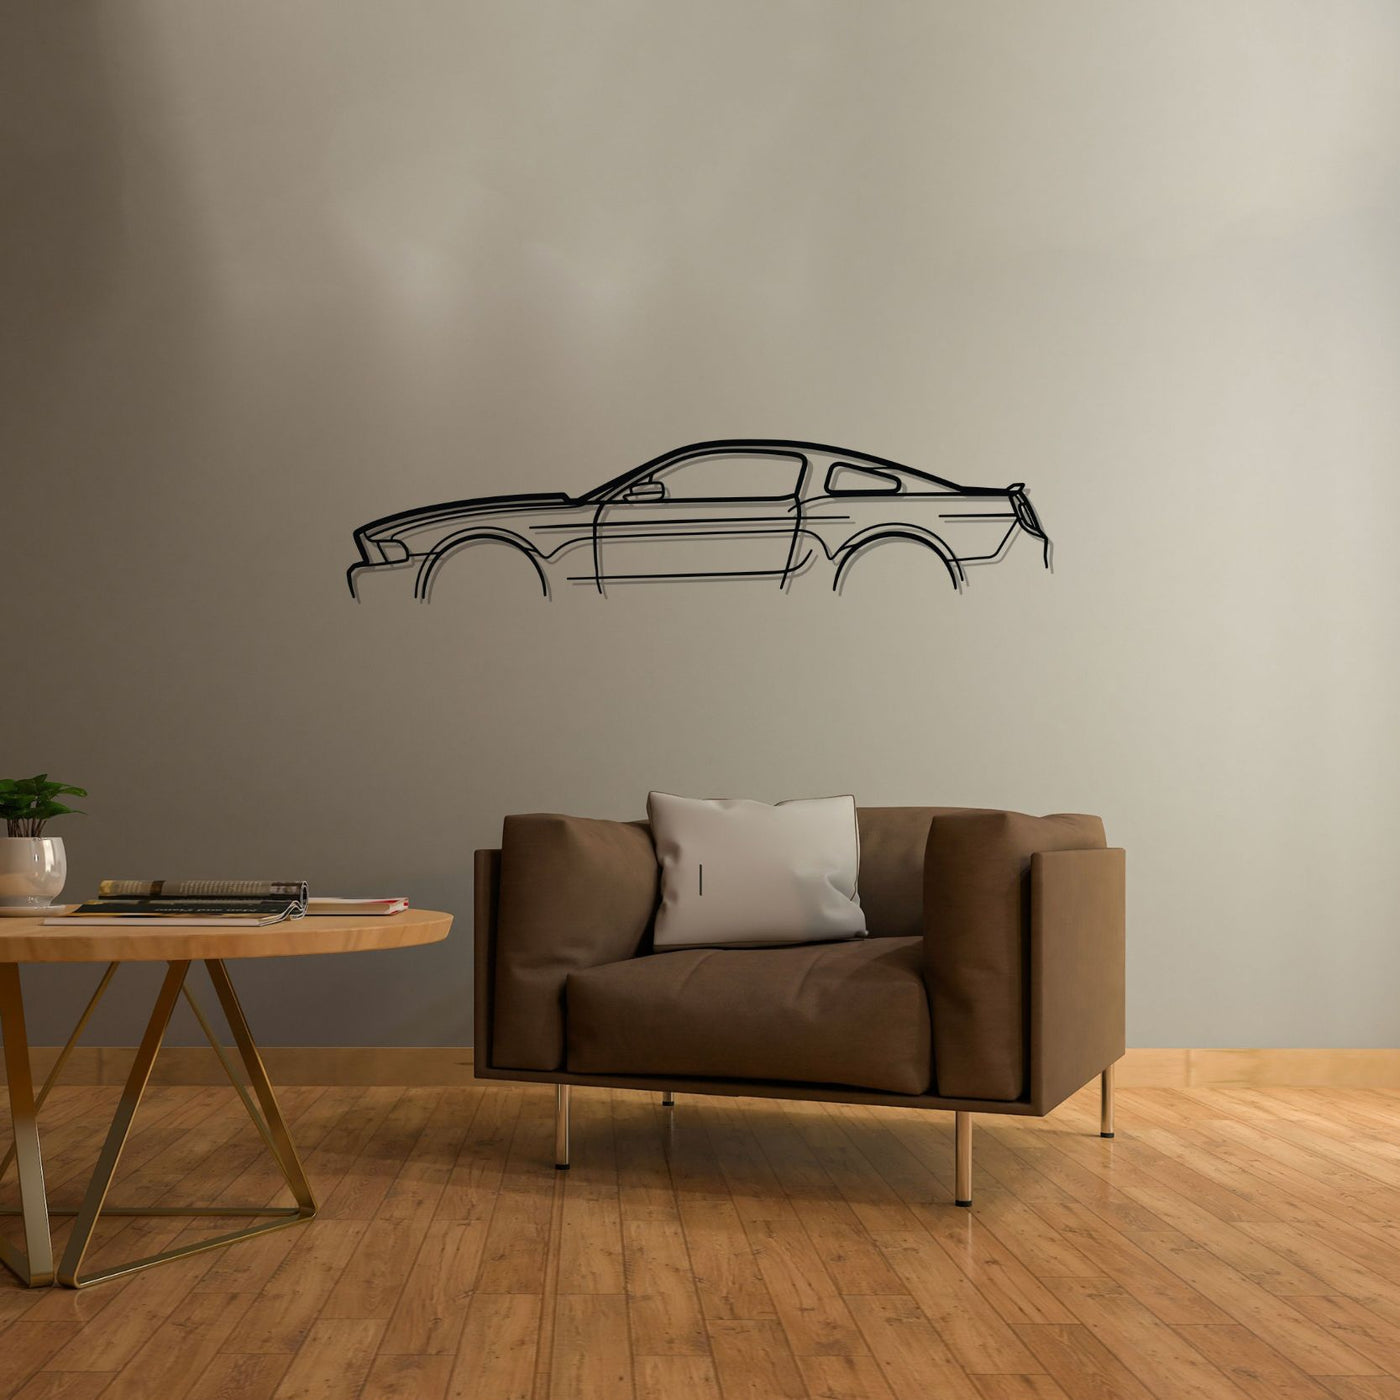 Mustang GT 2012 Classic Silhouette Metal Wall Art